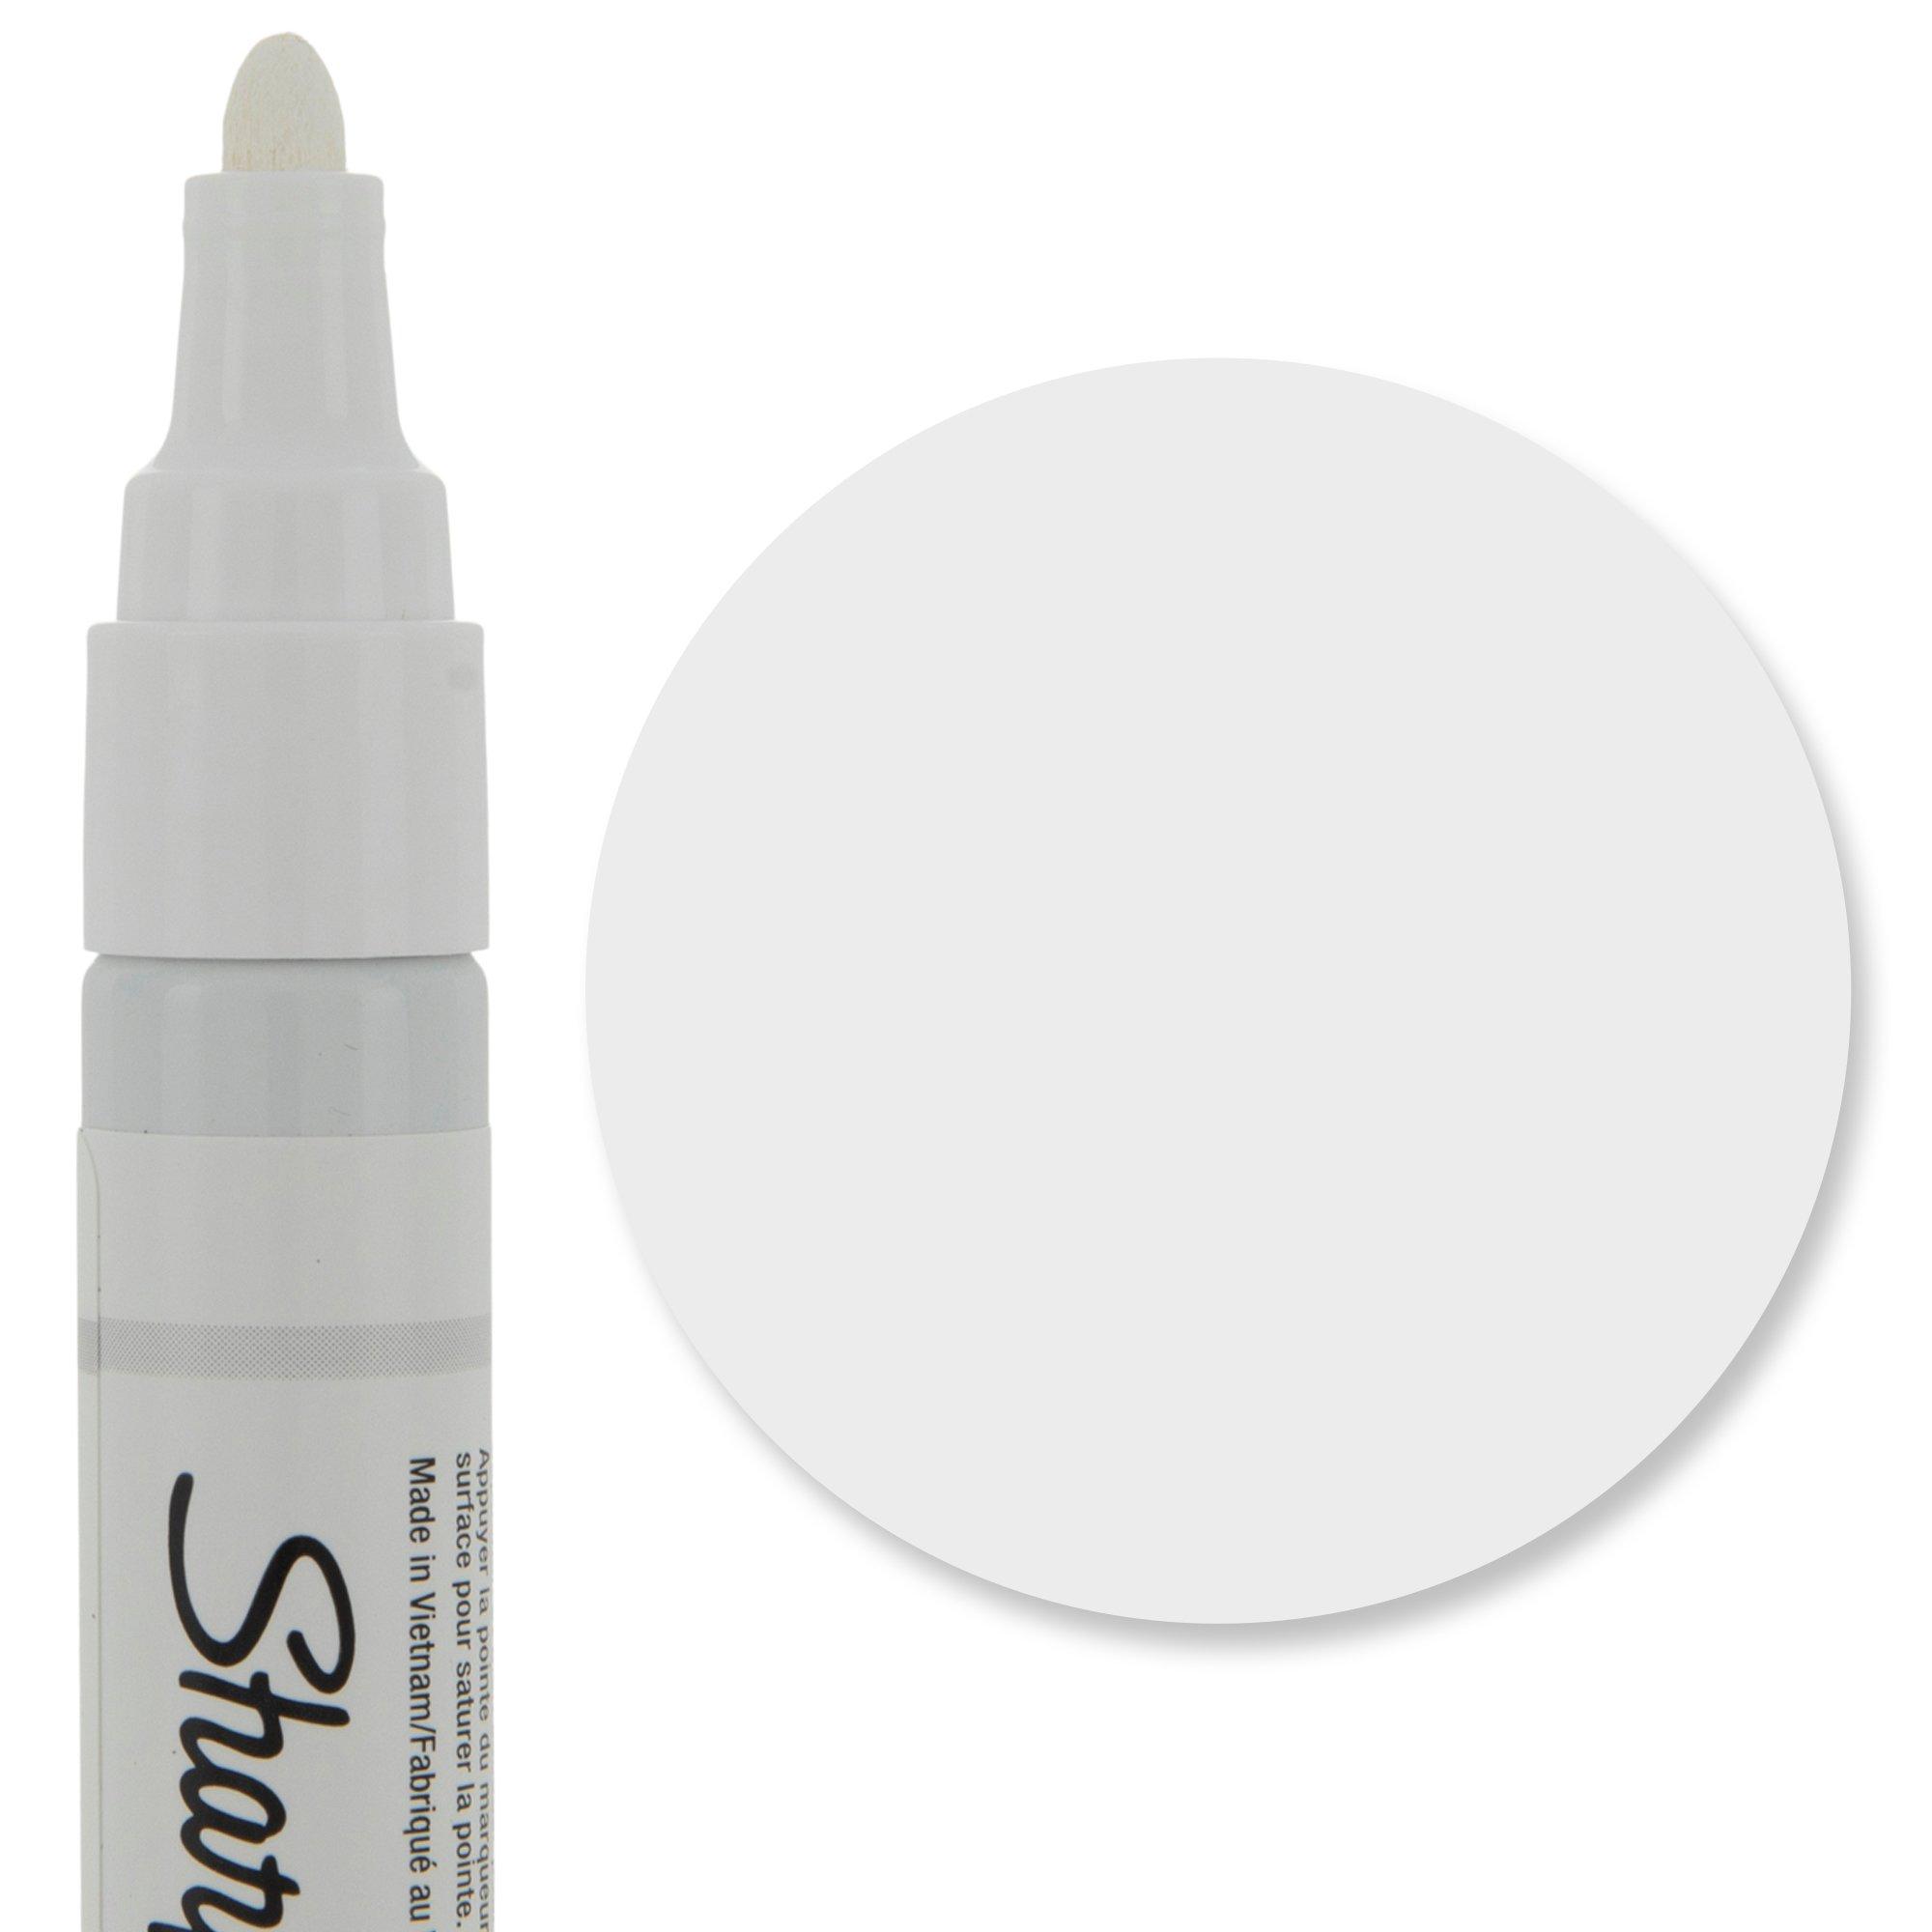 Sharpie Oil-Based Paint Marker - Fine Point 